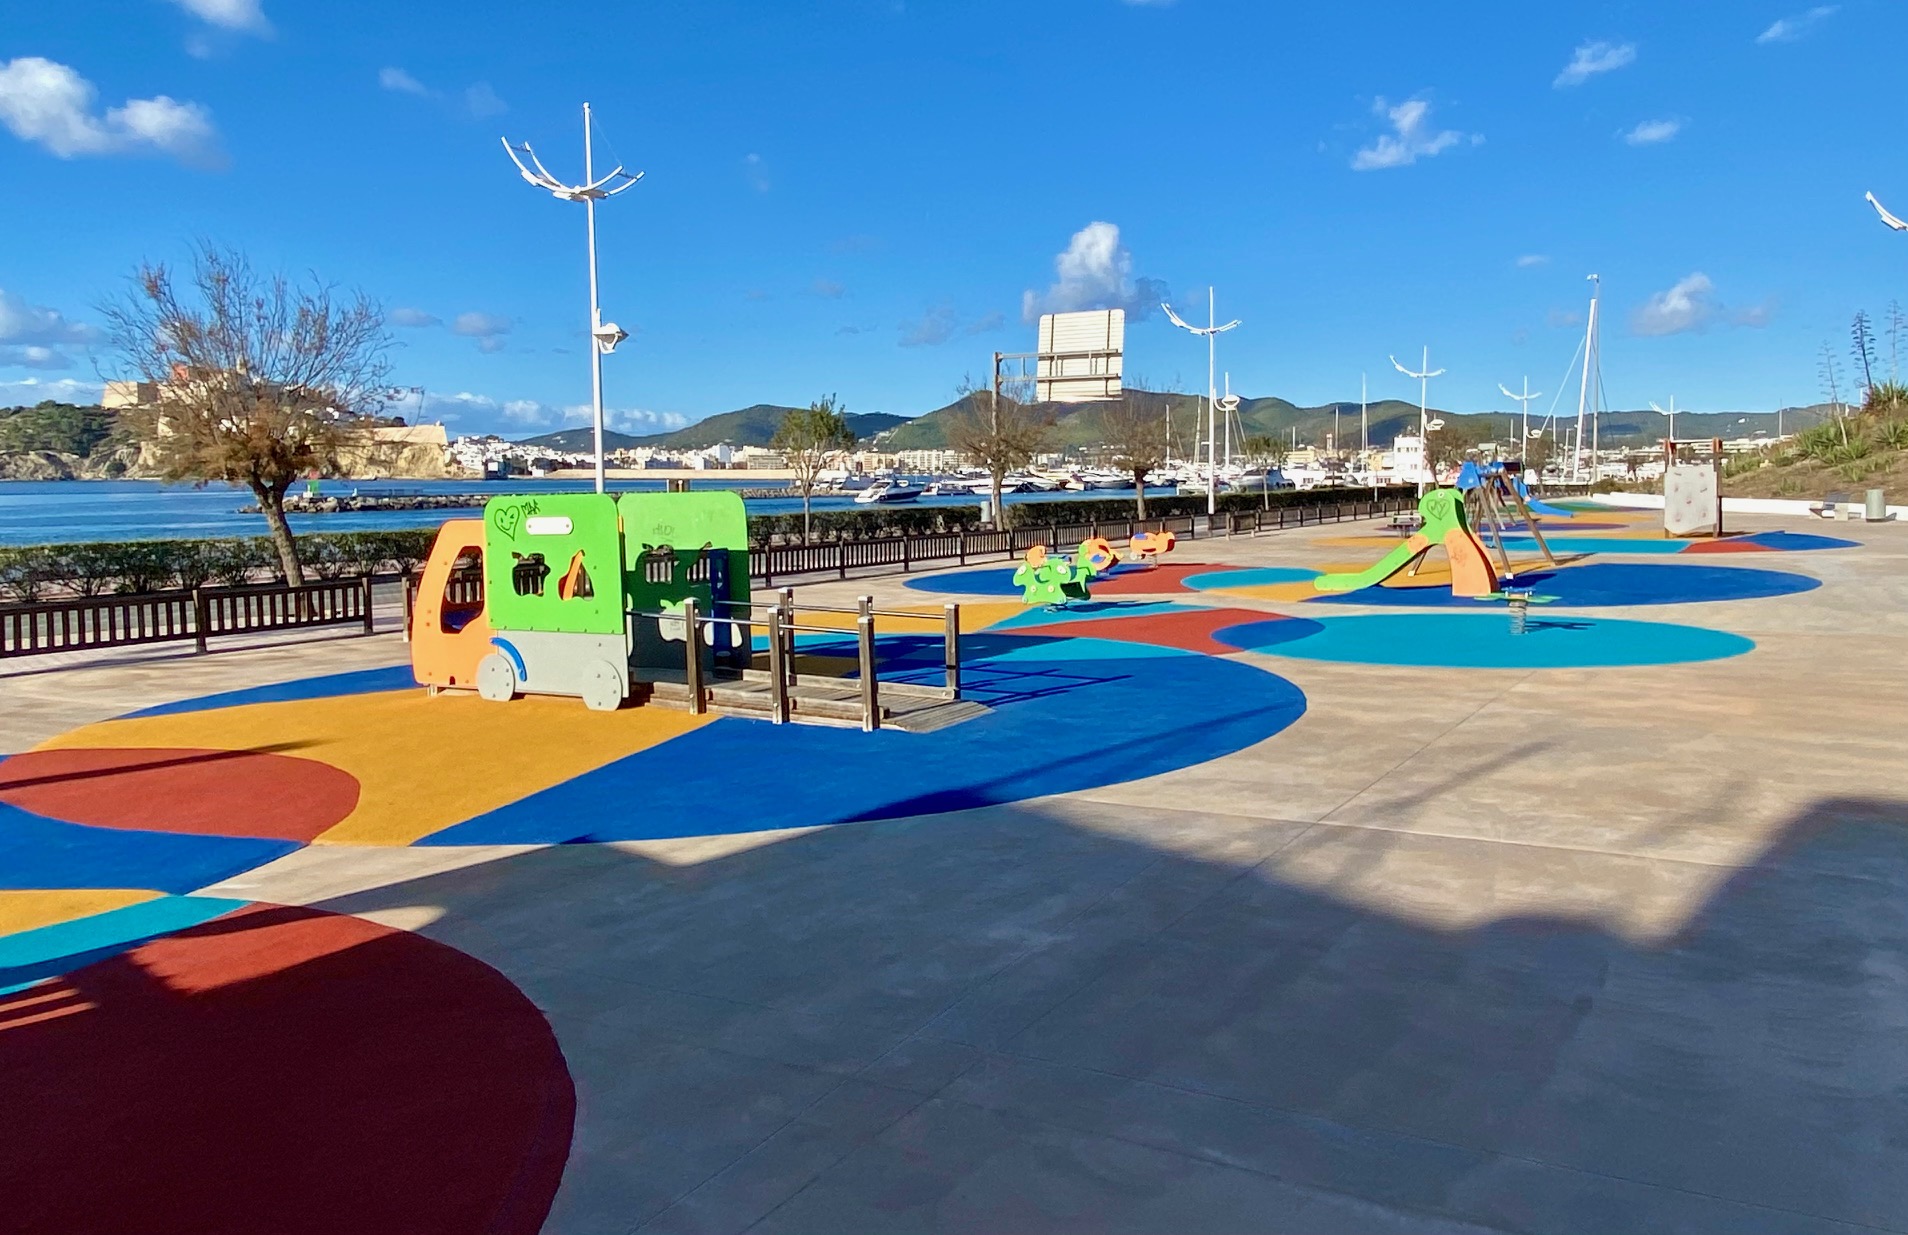 La APB renueva el pavimento del parque infantil del Botafoc en el puerto de Eivissa